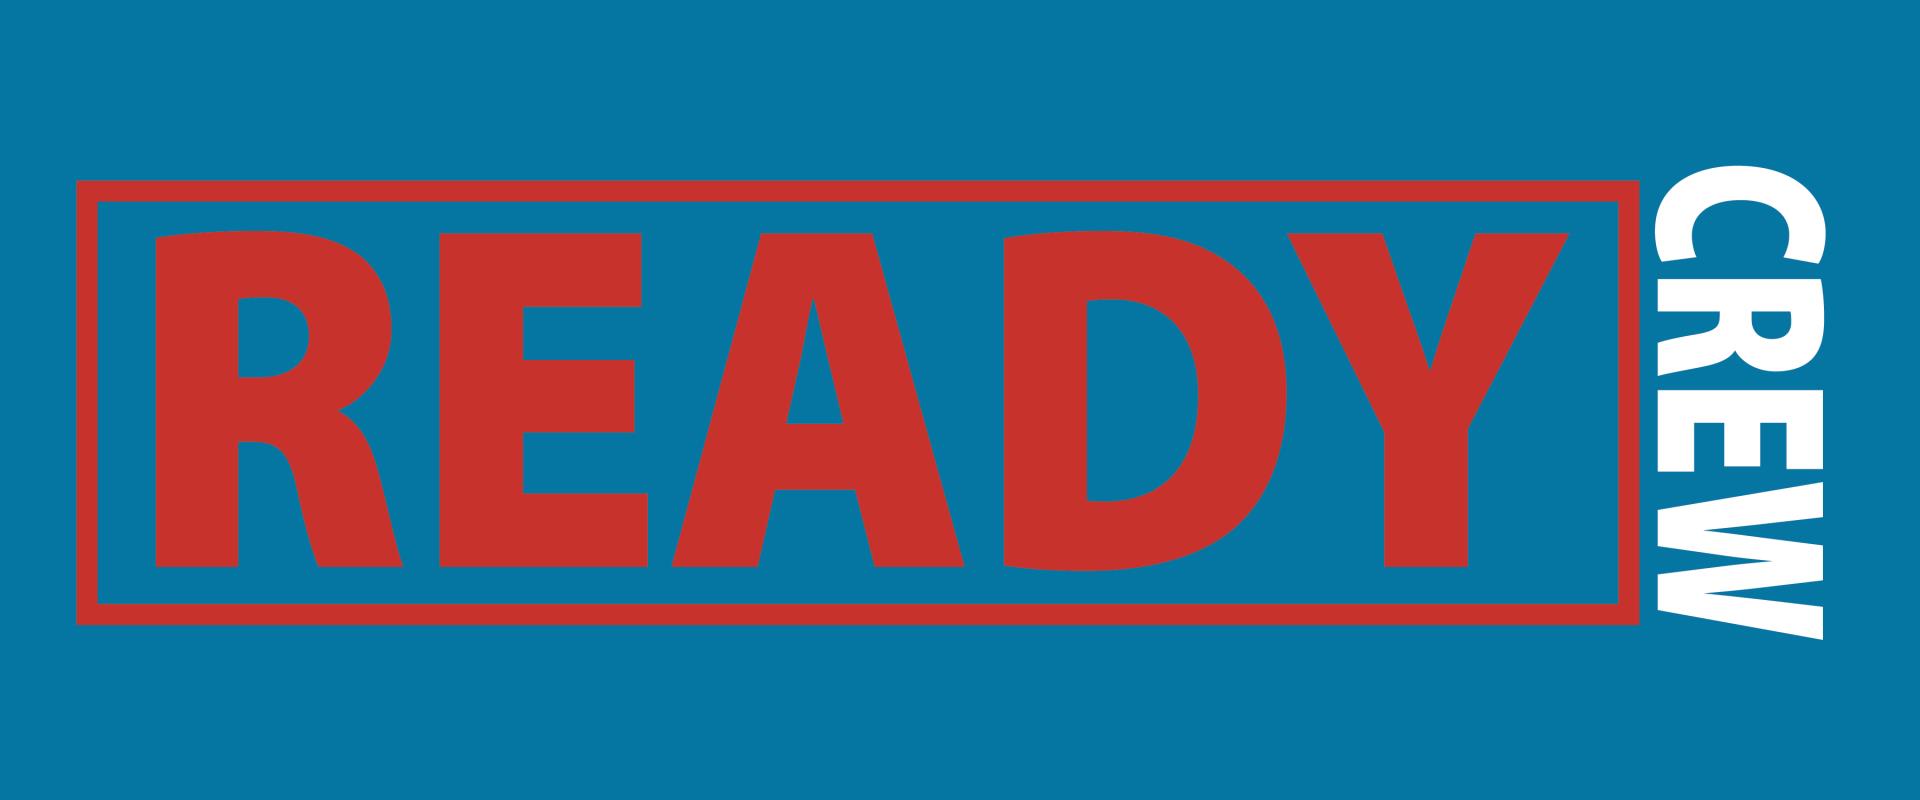 READY Crew logo